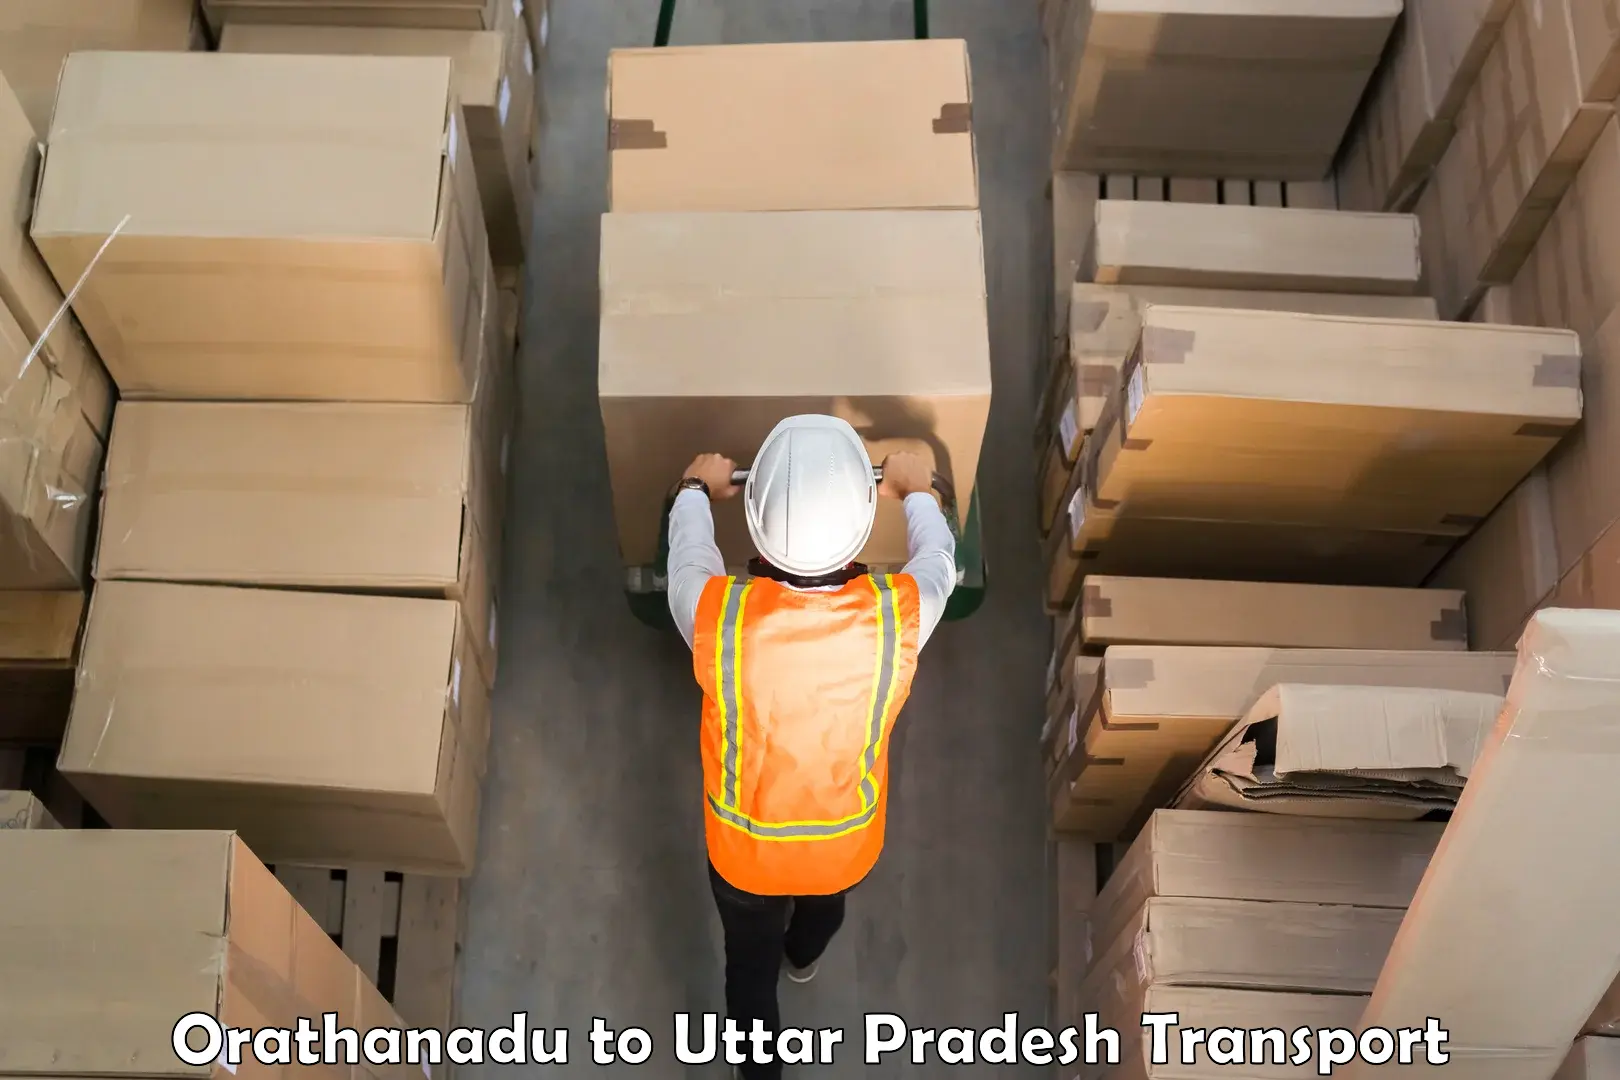 Delivery service Orathanadu to Agra